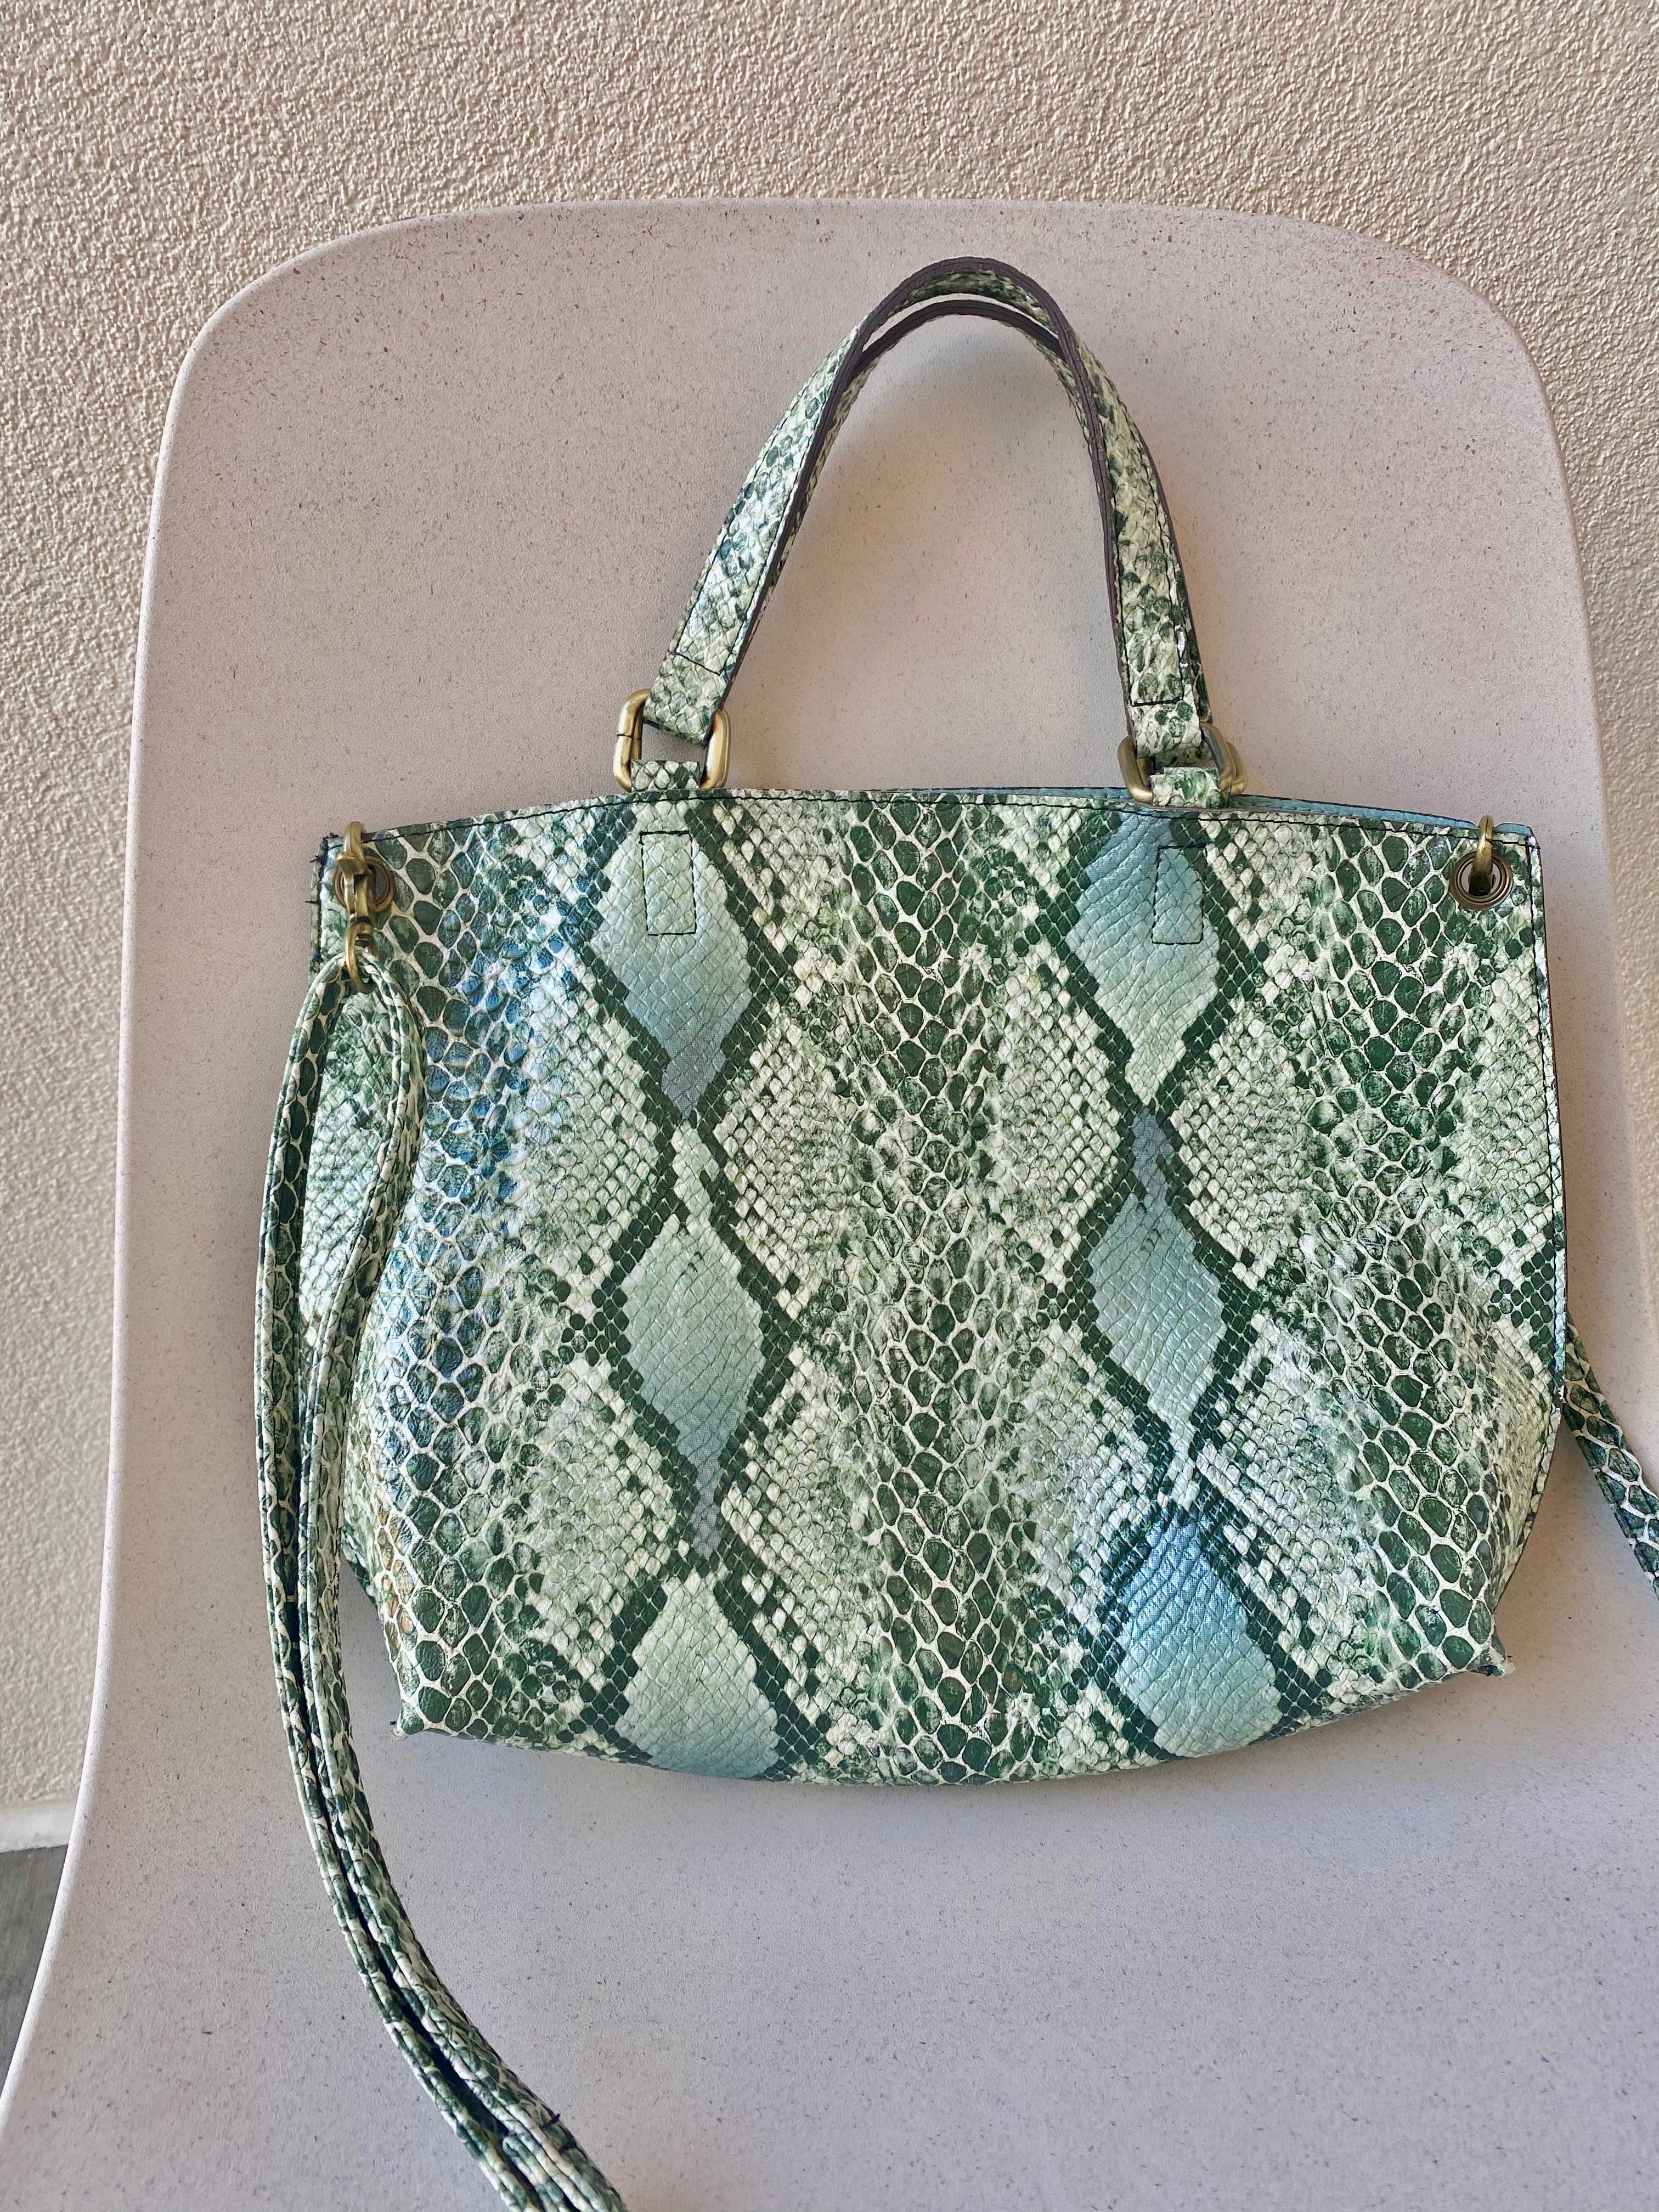 Teal & Green Snake Print Leather Purse/Crossbody Bag